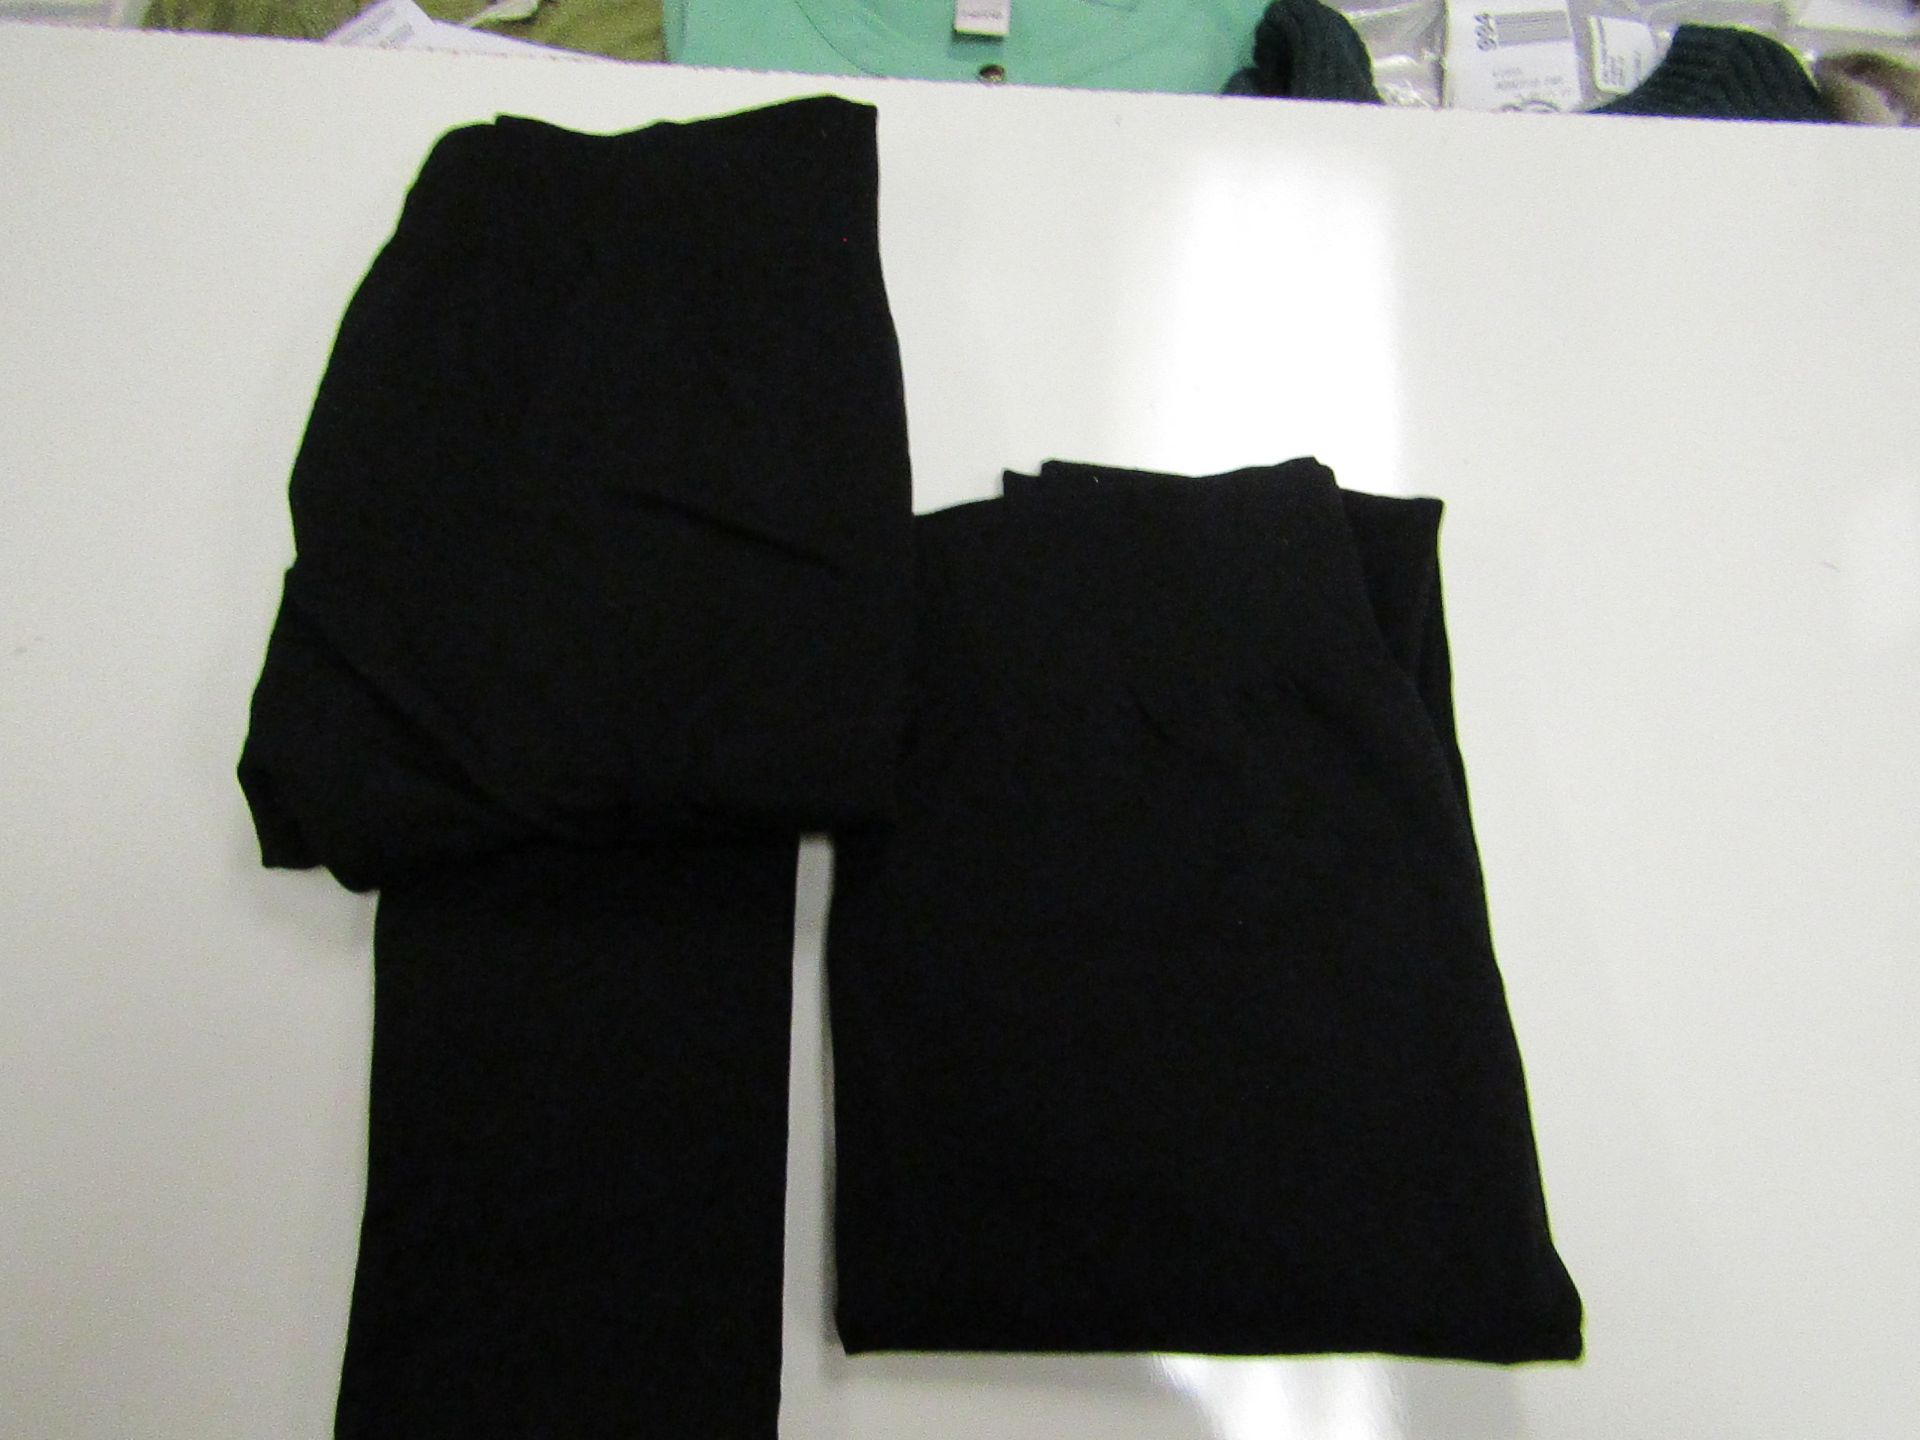 2 X Pairs of Ellen Reyes Fleecy Lined Leggings Black Size X/L new No Packaging